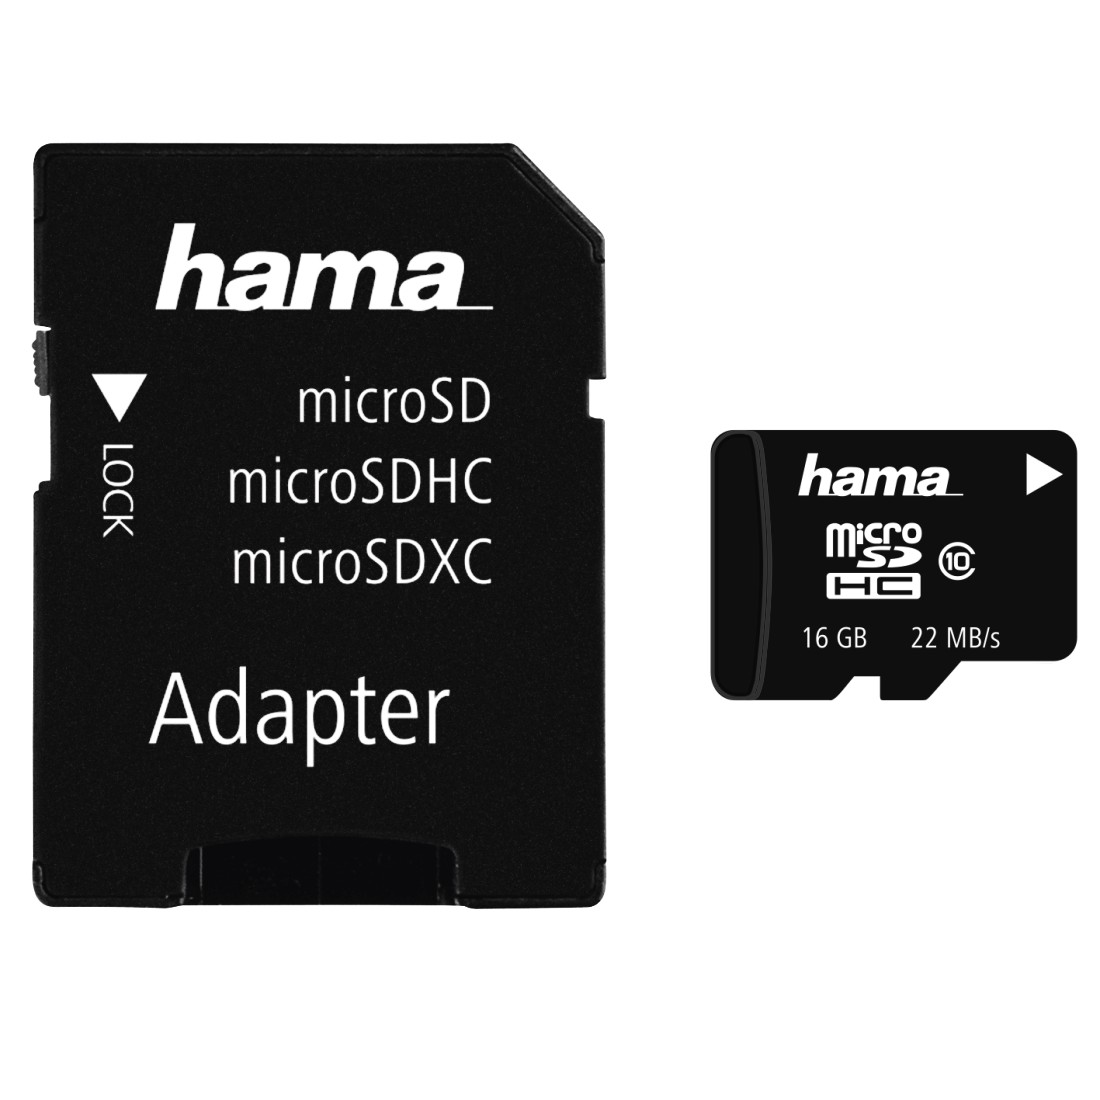 You Recently Viewed Hama 16GB Class 10 microSDHC, 22 MBs Image